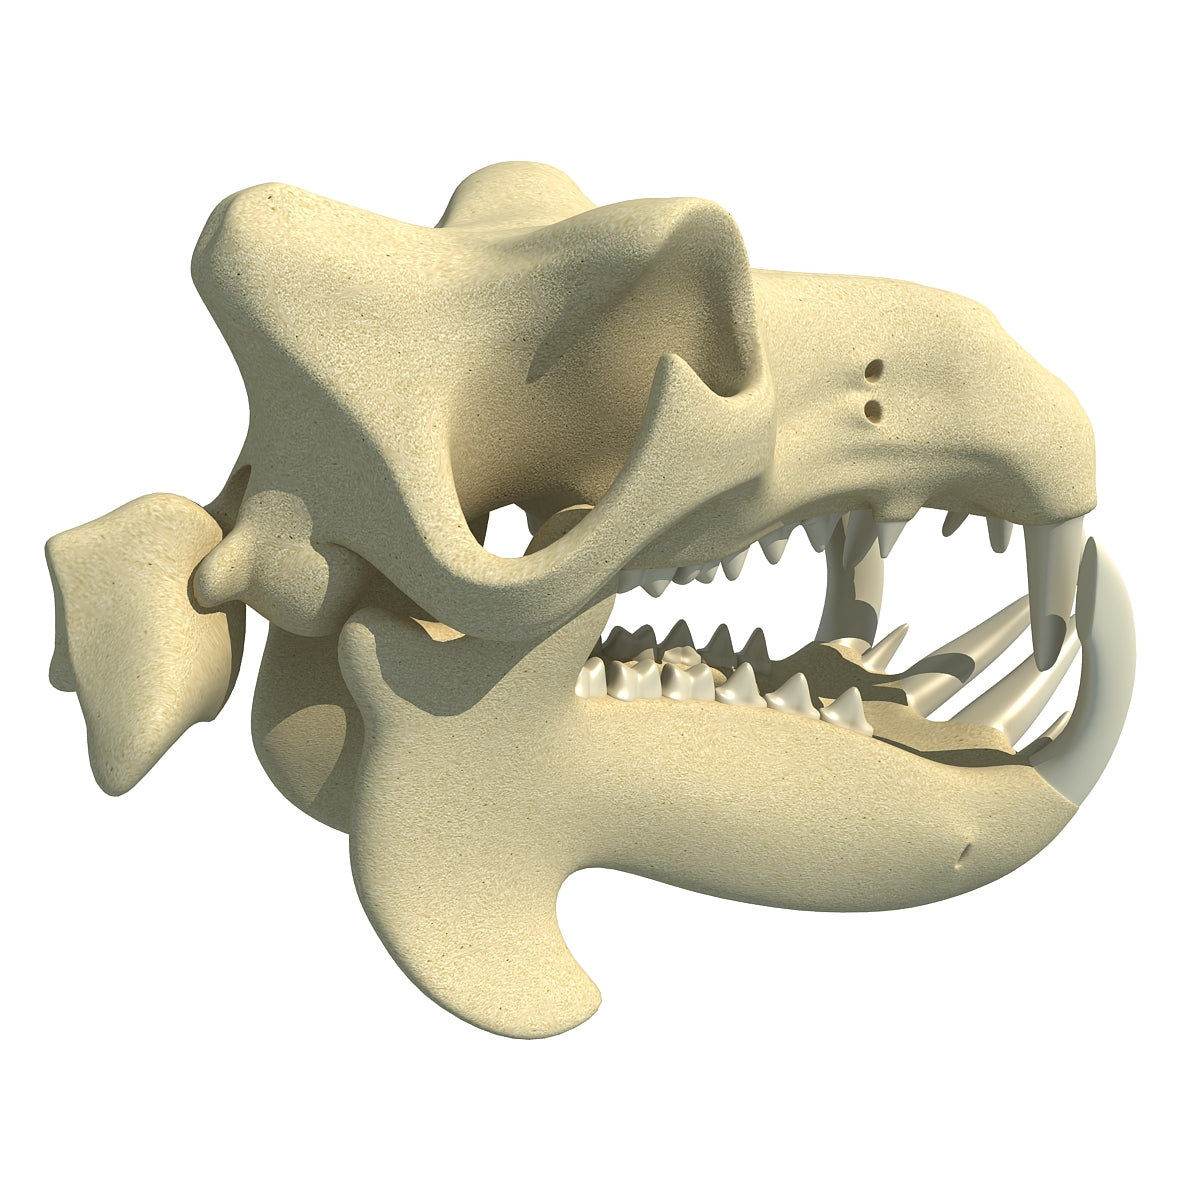 3D Animal Skull Models